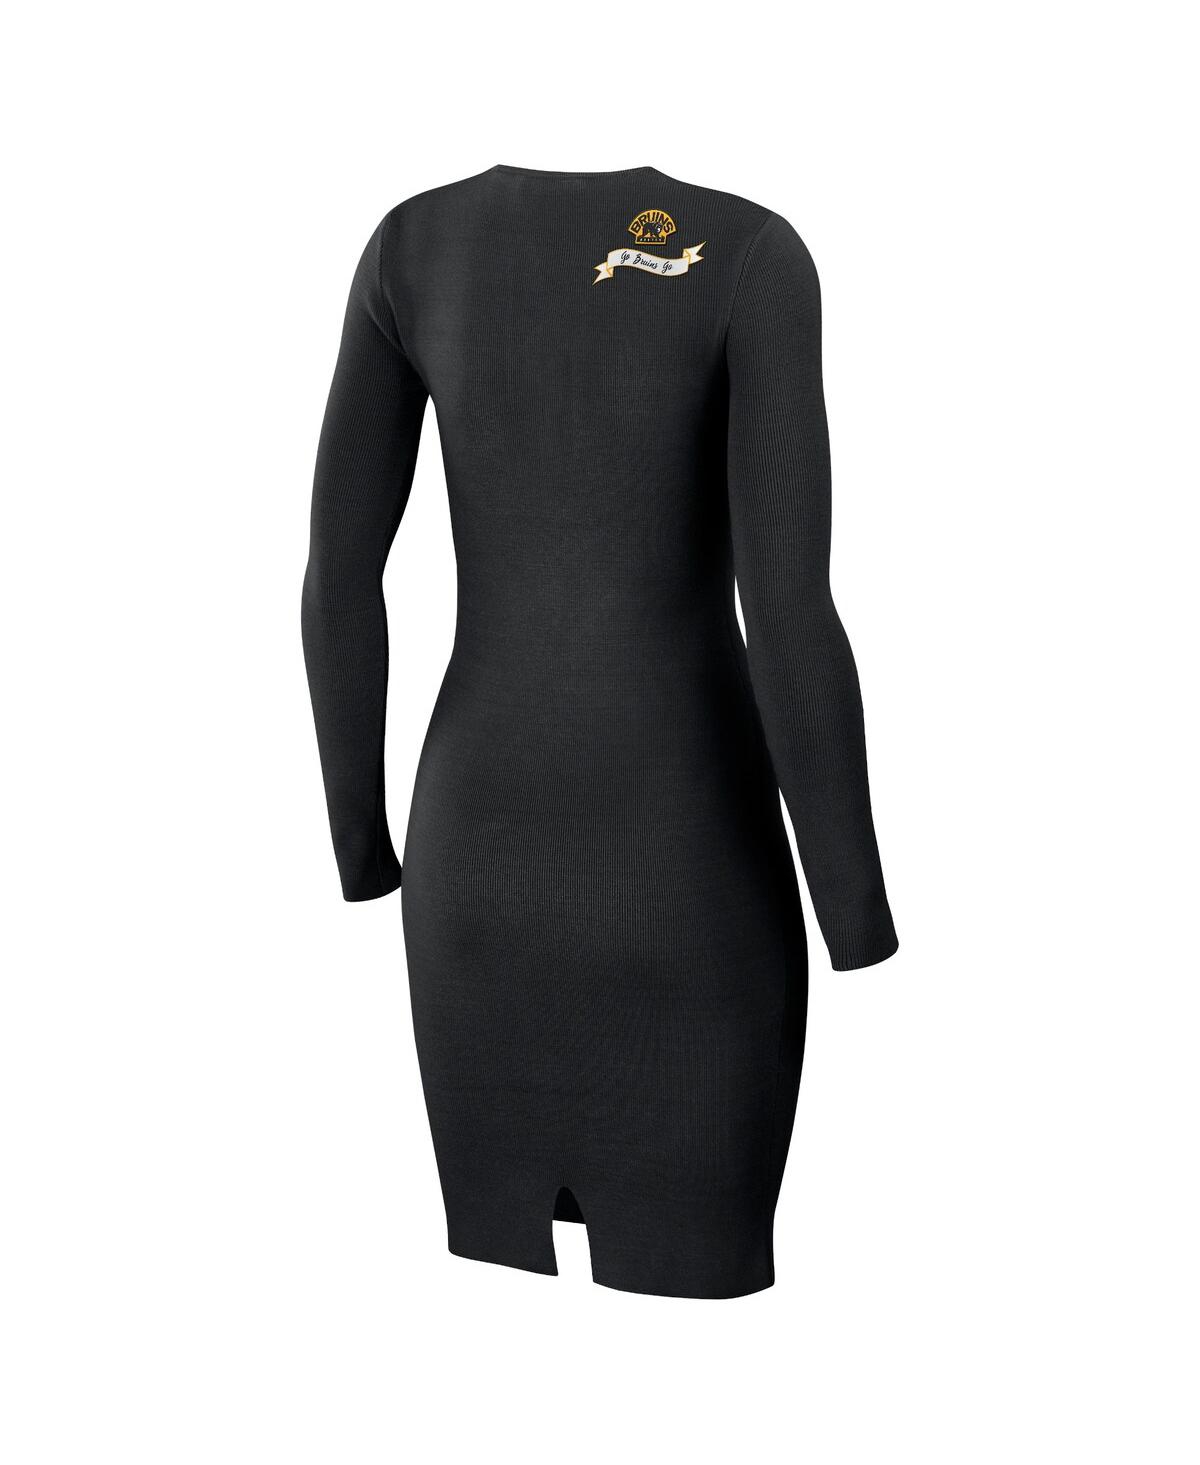 Shop Wear By Erin Andrews Women's  Black Boston Bruins Lace-up Dress